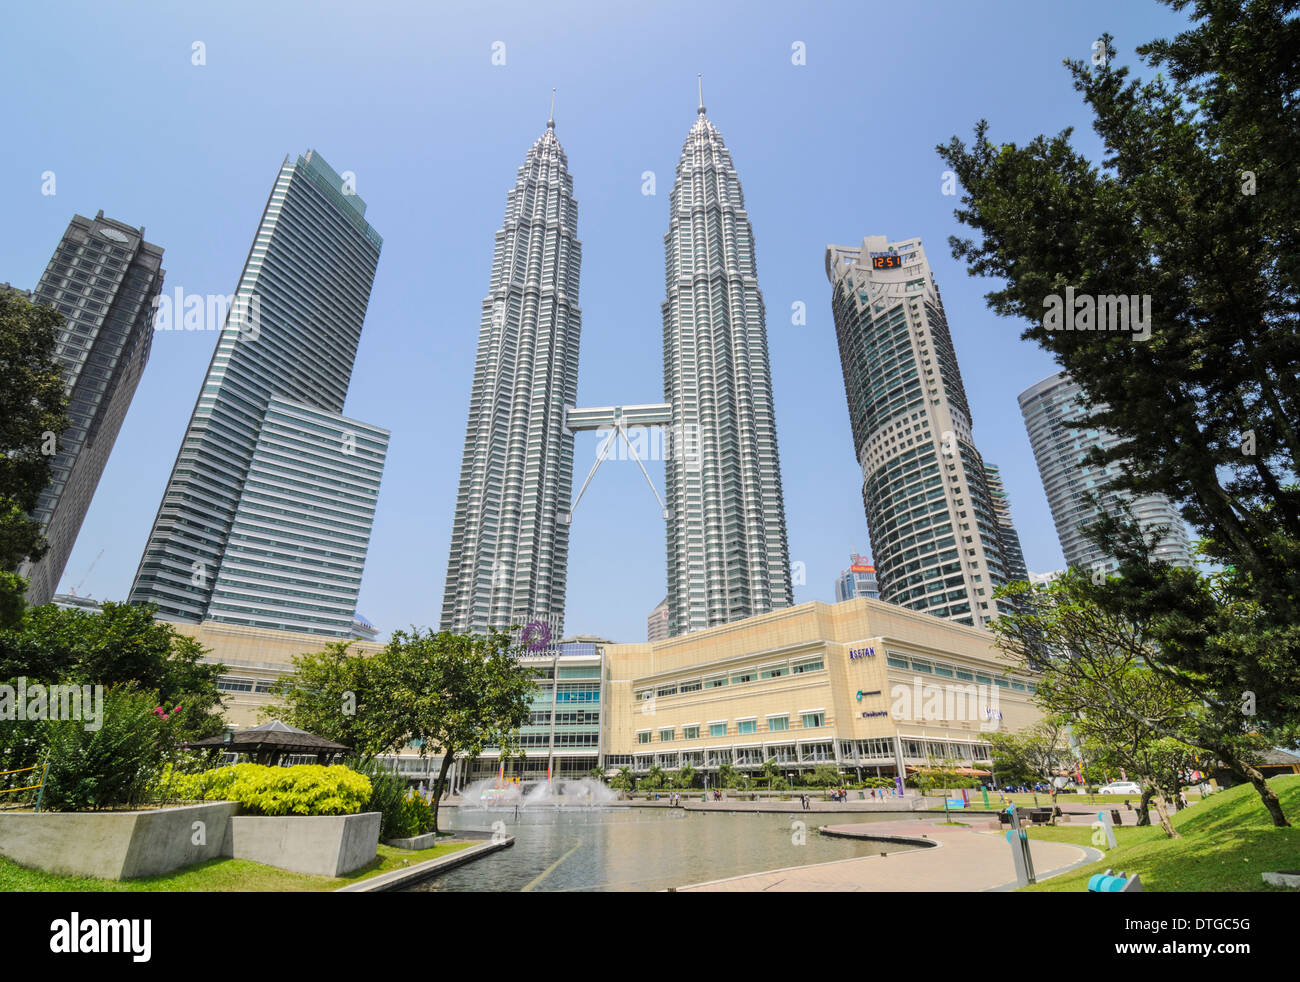 KLCC e le Torri Gemelle Petronas, Kuala Lumpur, Malesia Foto Stock